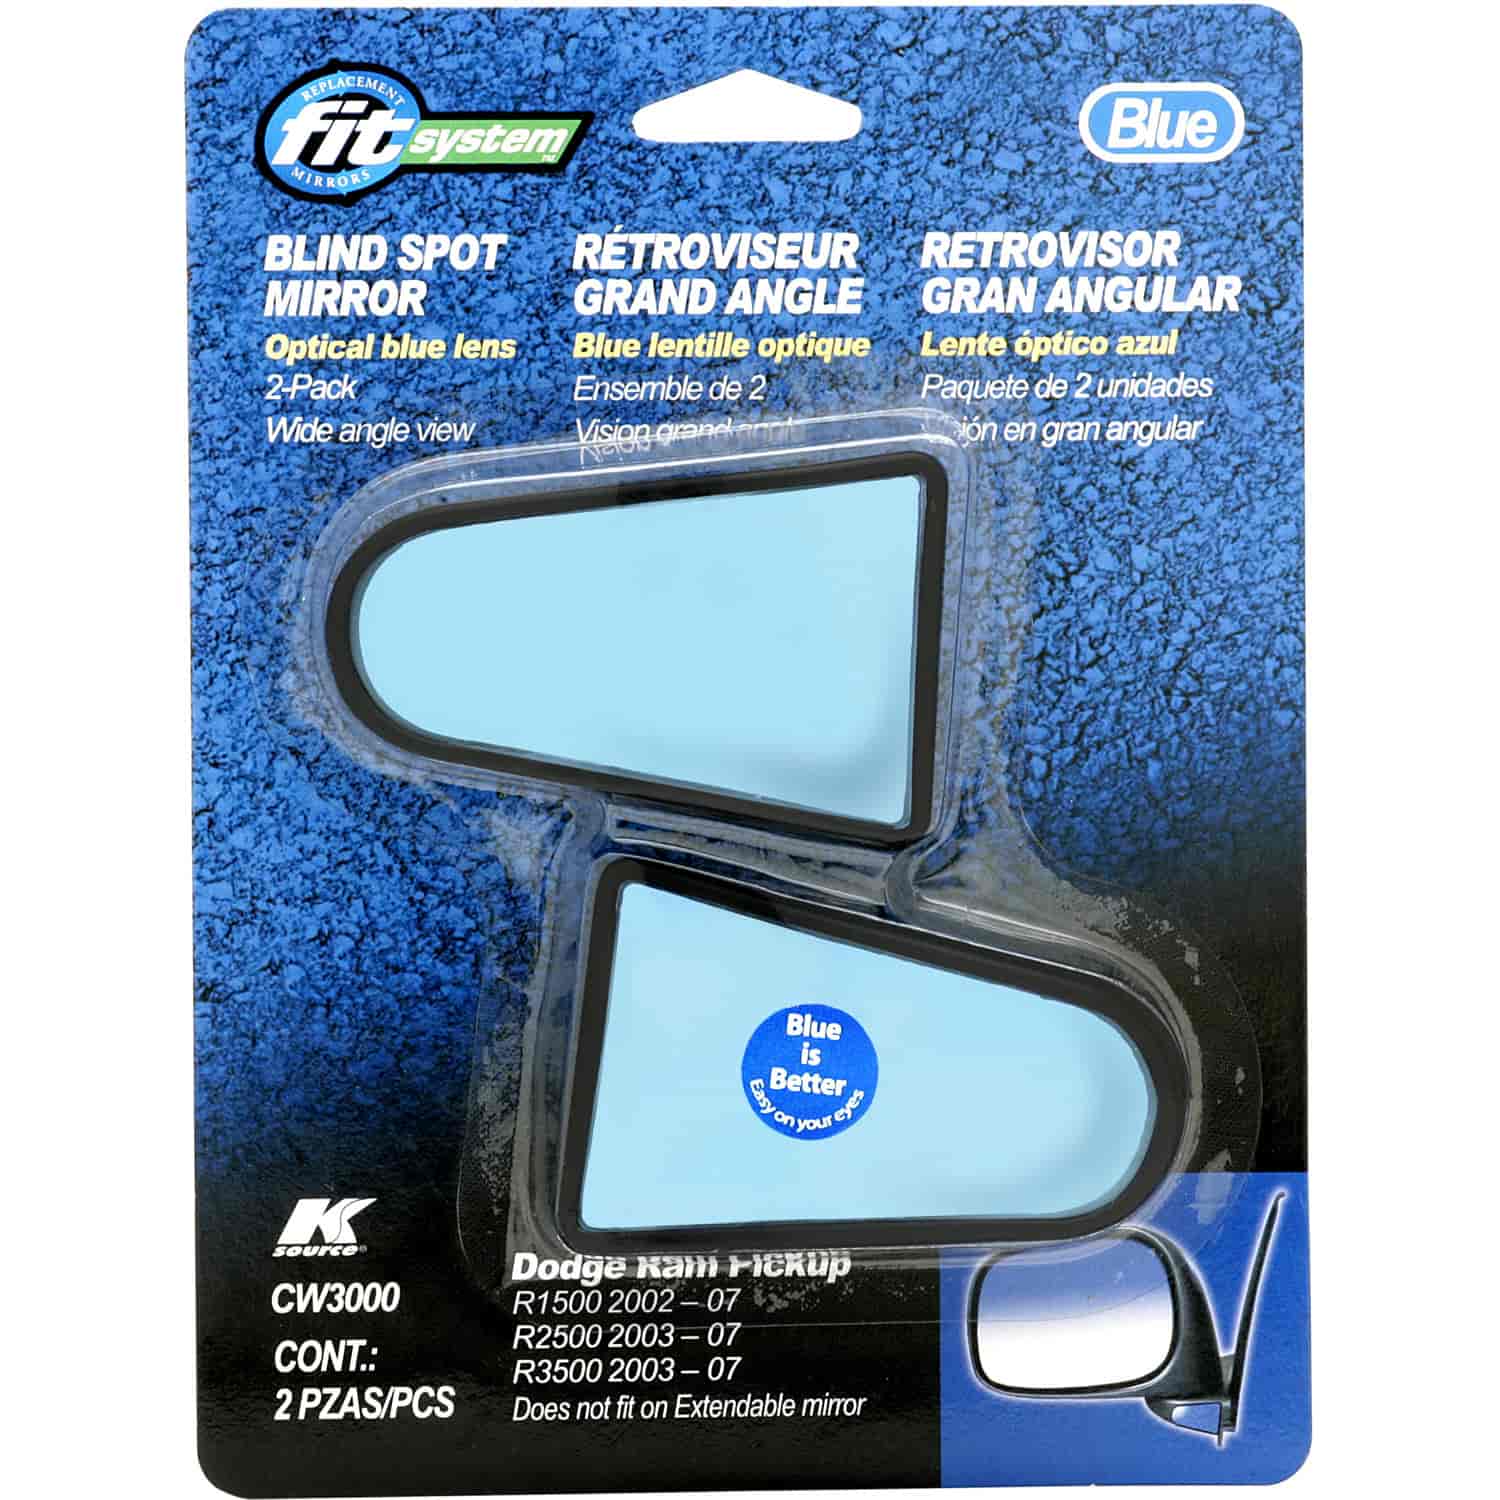 Custom Fit Spot Mirror Dodge 02 - 07 2 Pack Optical Blue Lens Optical Blue Lens to Reduce Glare Cust